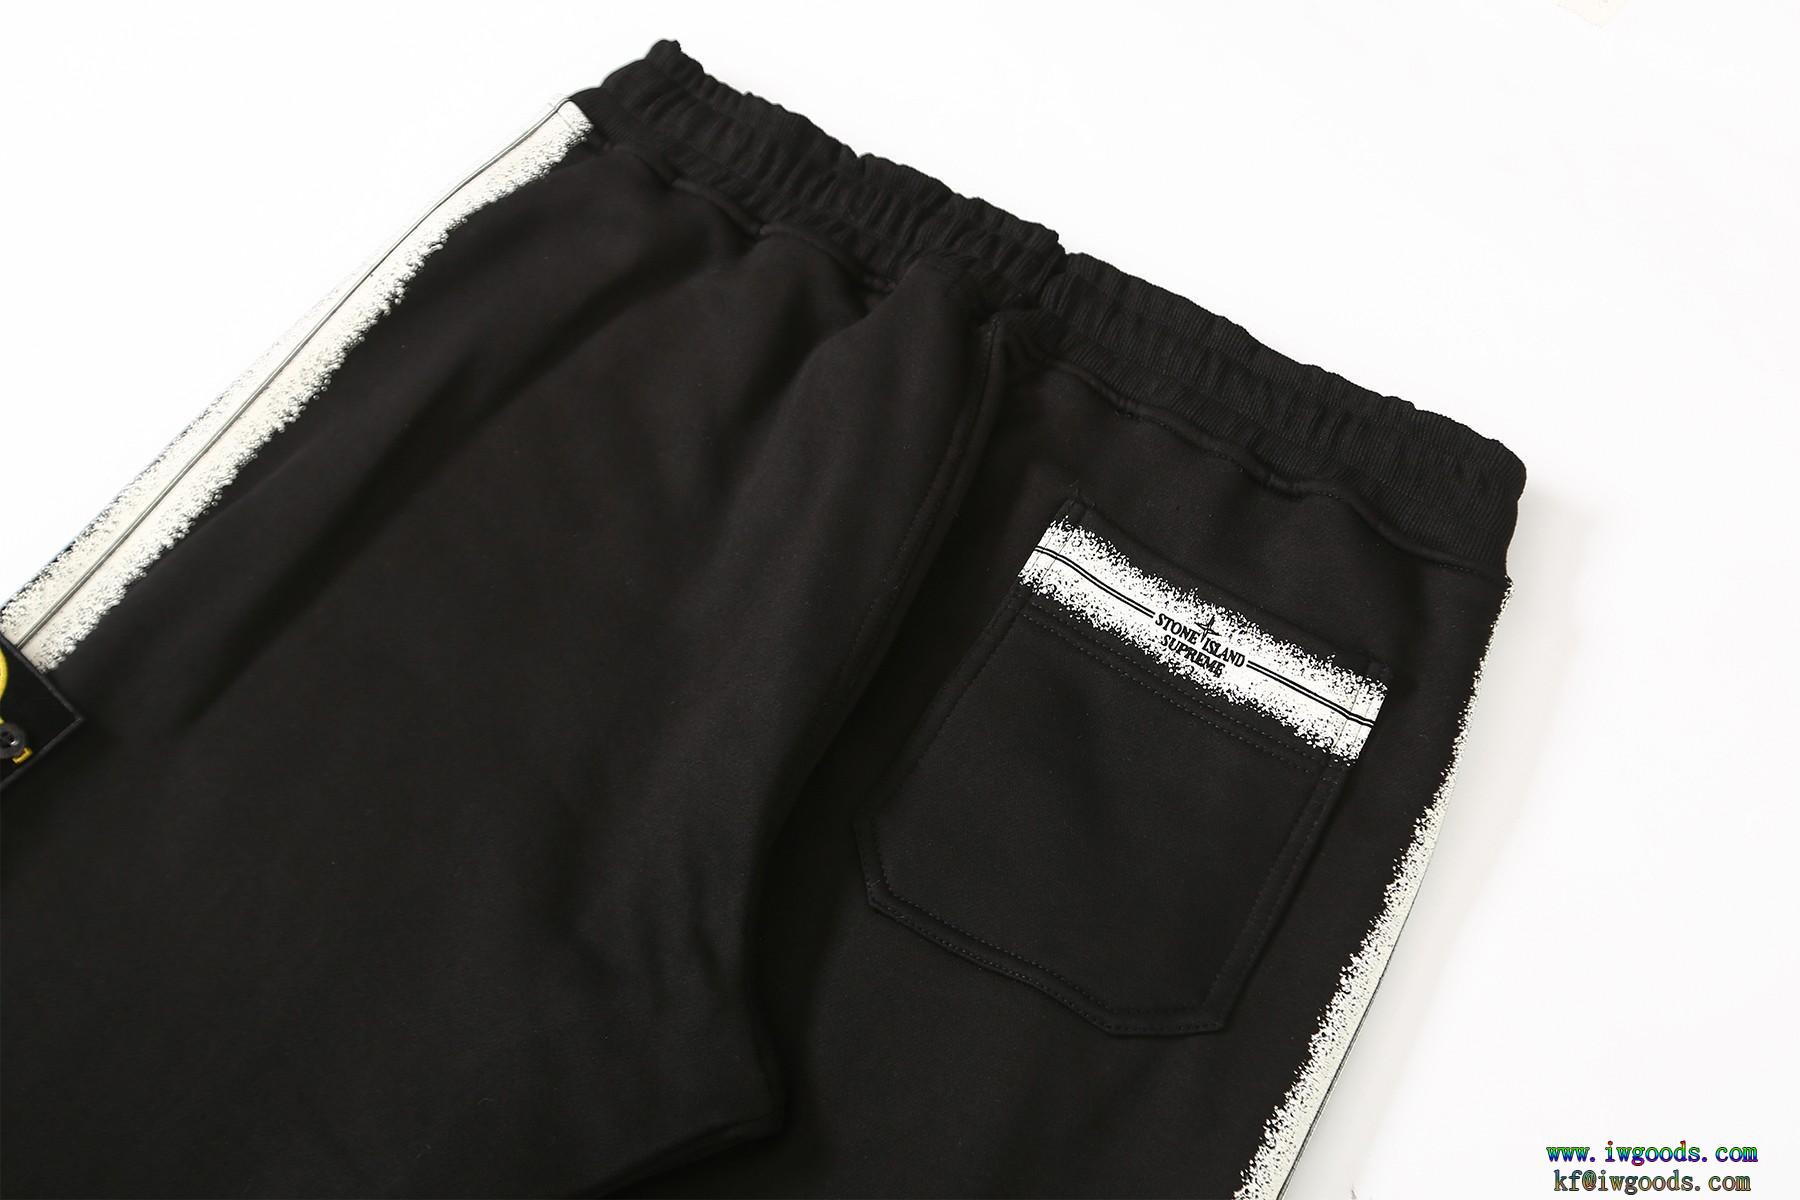 STONE ISLAND X SUPREMEオシャレな印象に発表の新作モデルブランド スーパー コピー 優良ズボン